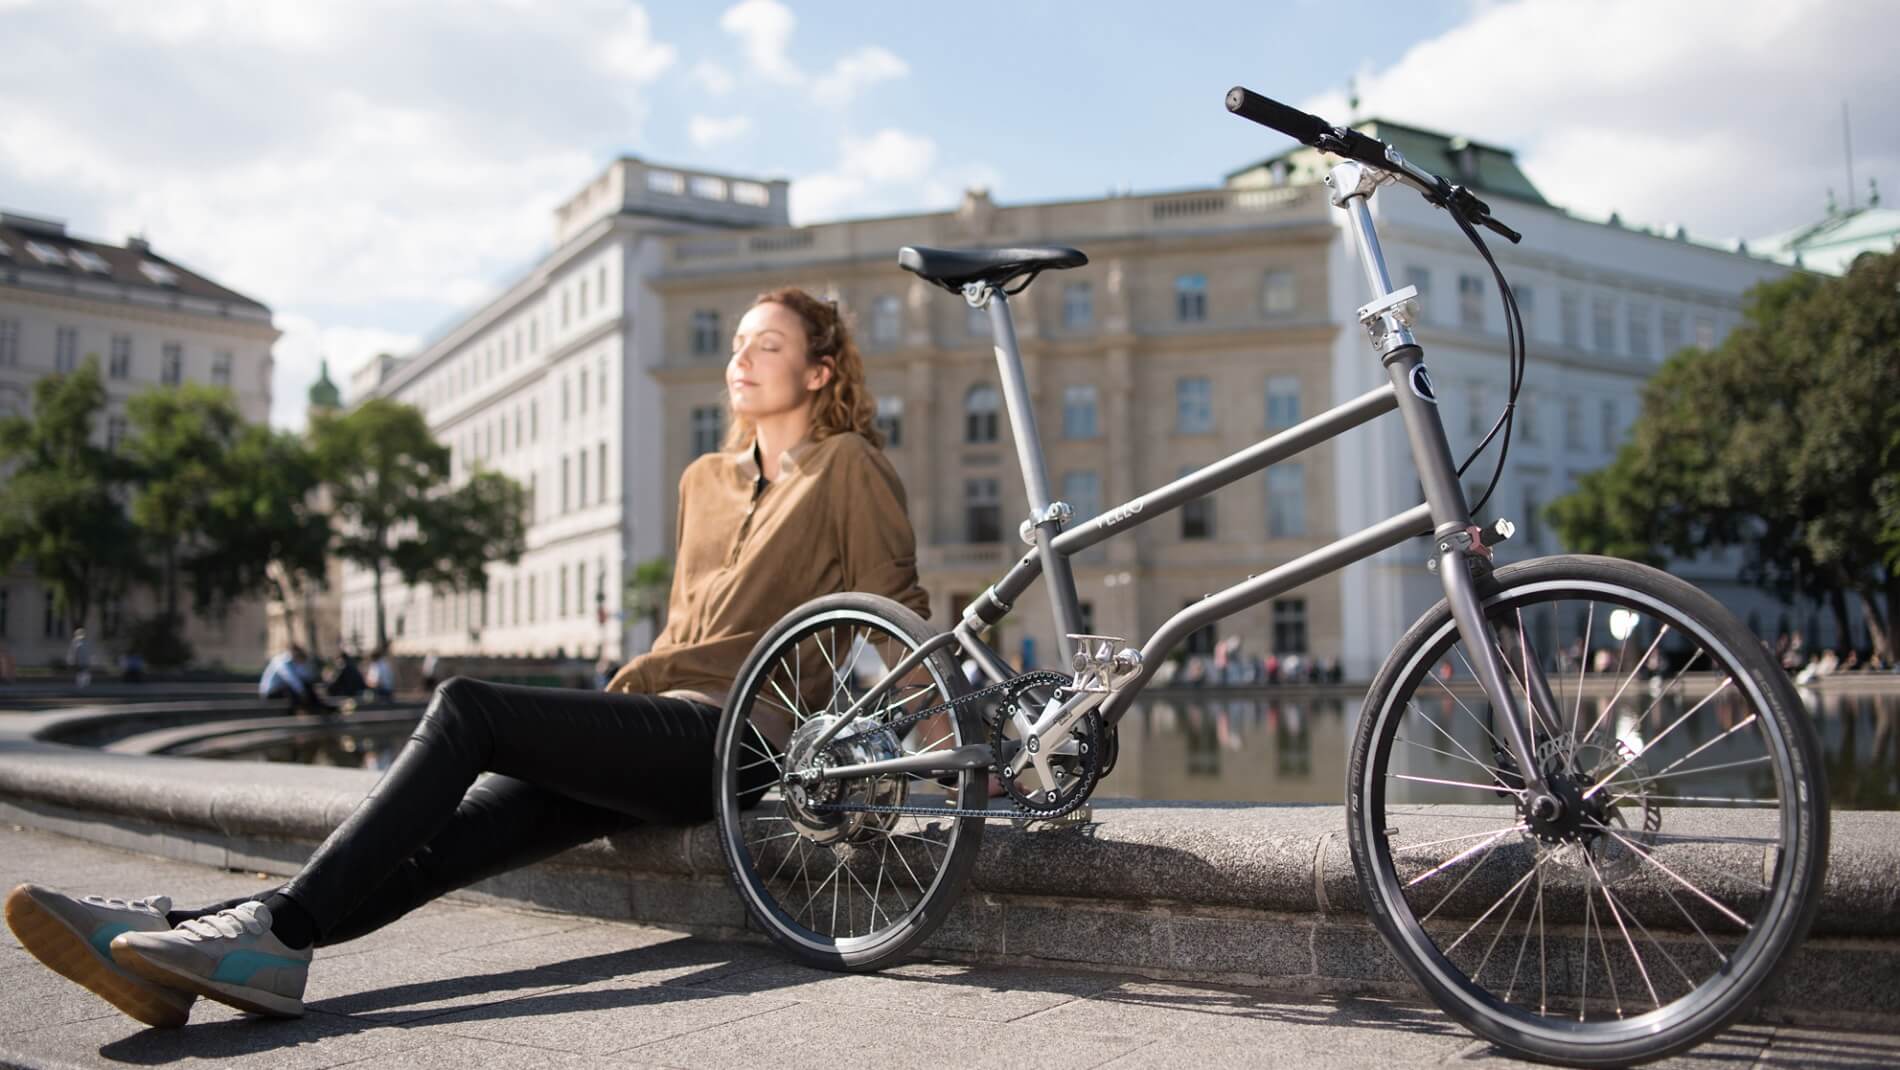 VELLO Folding City Bike - Foldable Bike City Tour - Vienna Bike Tour - Lightweight Compact E Bike - Electric Designer Bike